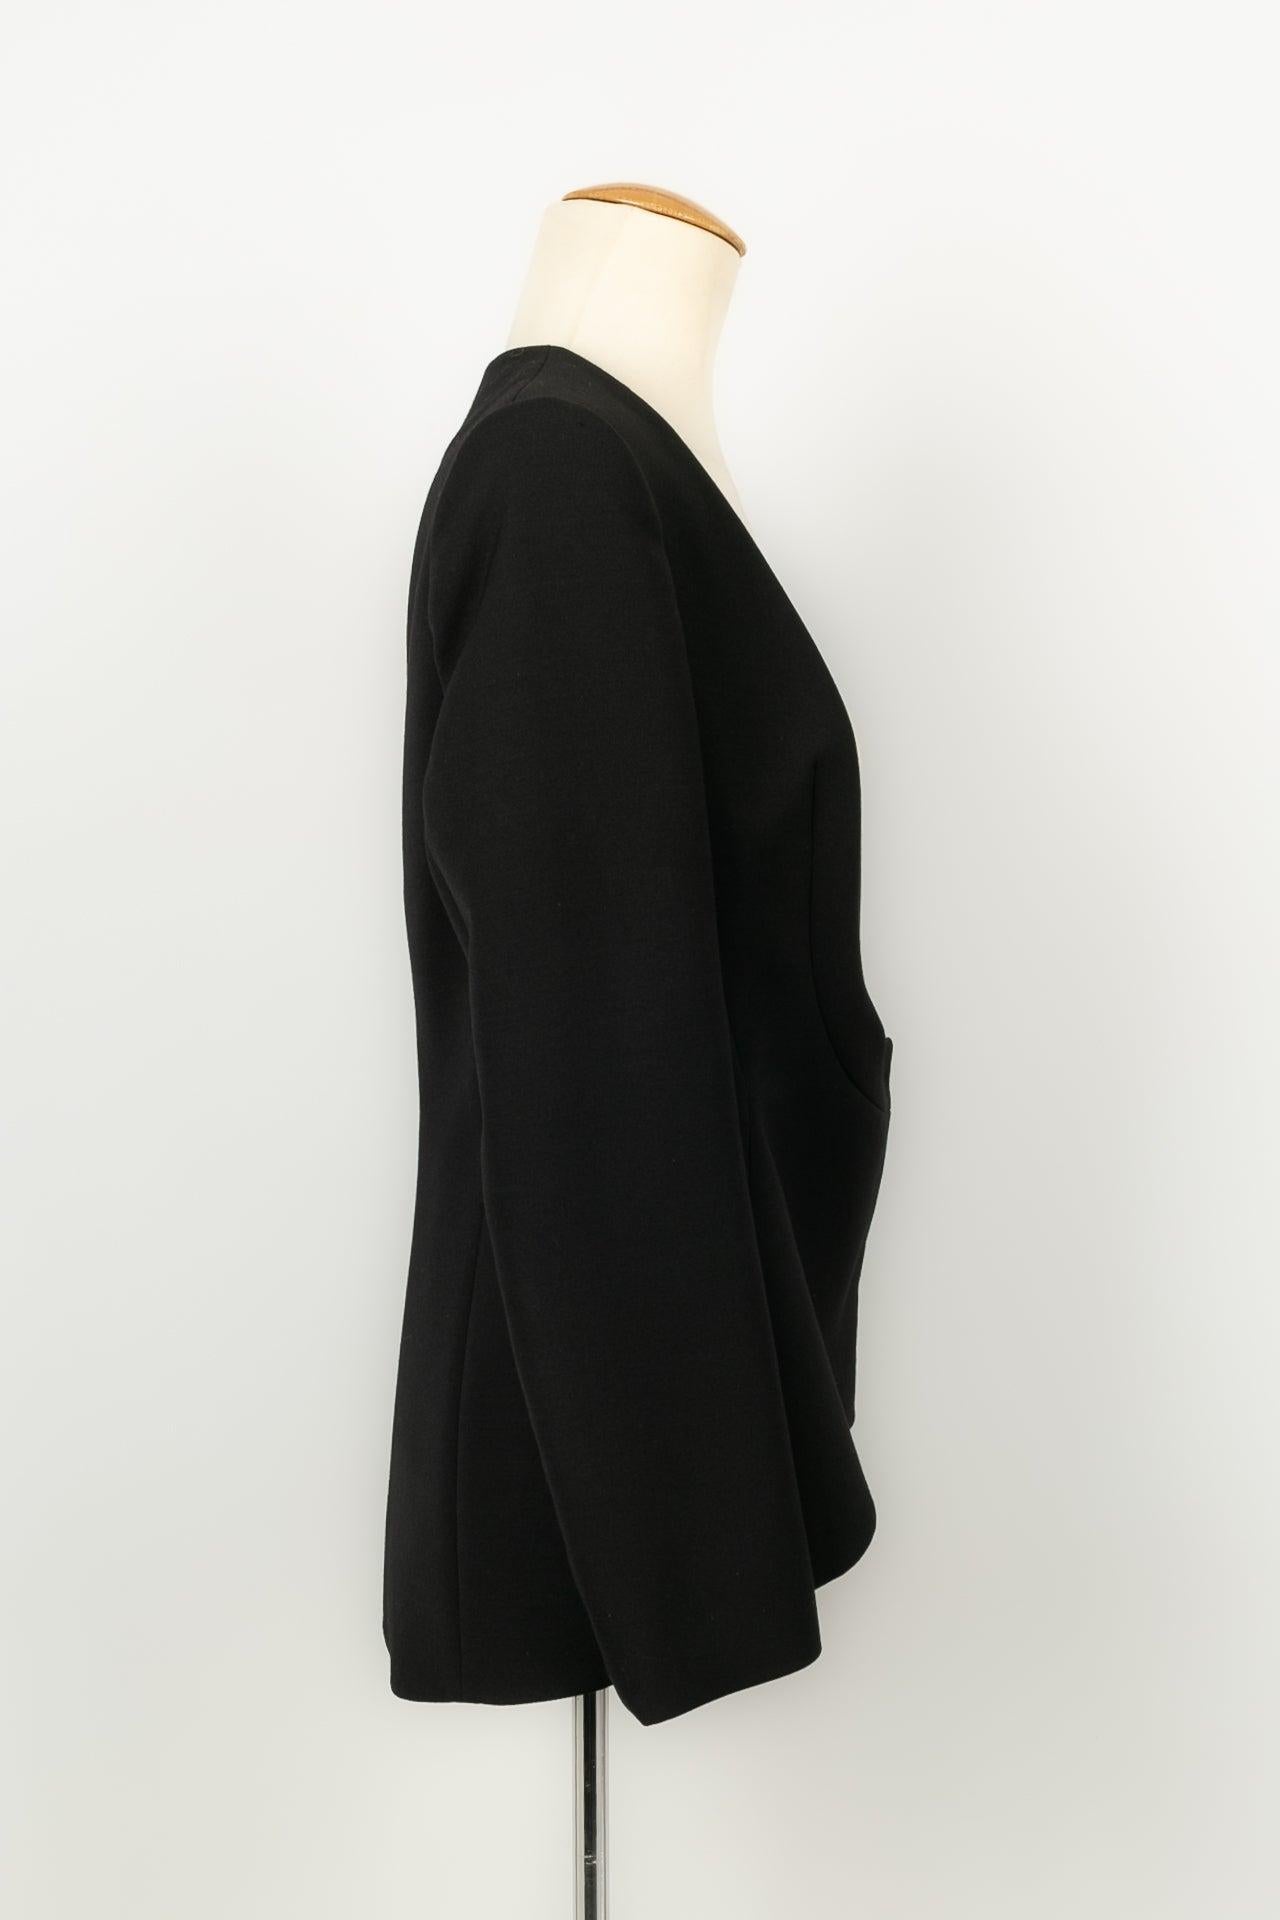 Women's Dior Jacket in Black Wool For Sale